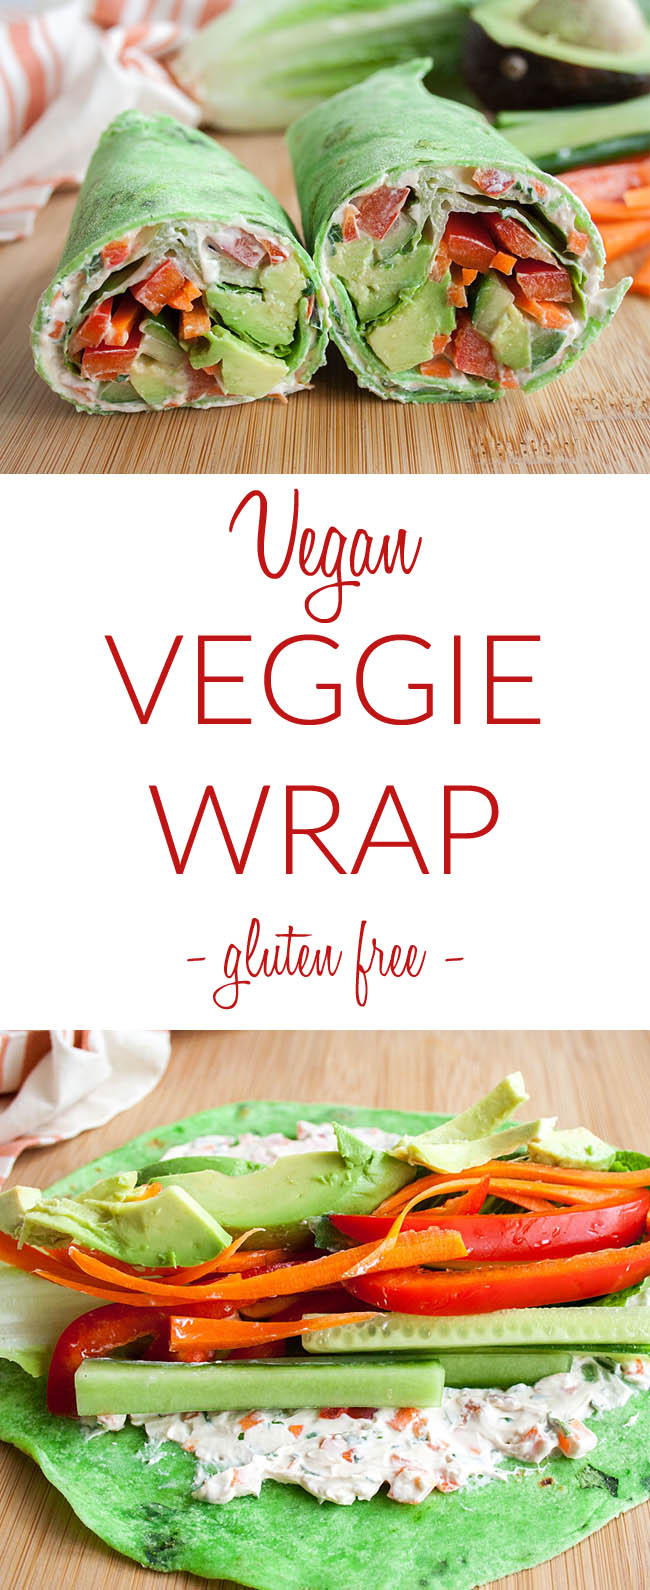 Vegan Veggie Wrap collage photo with text.